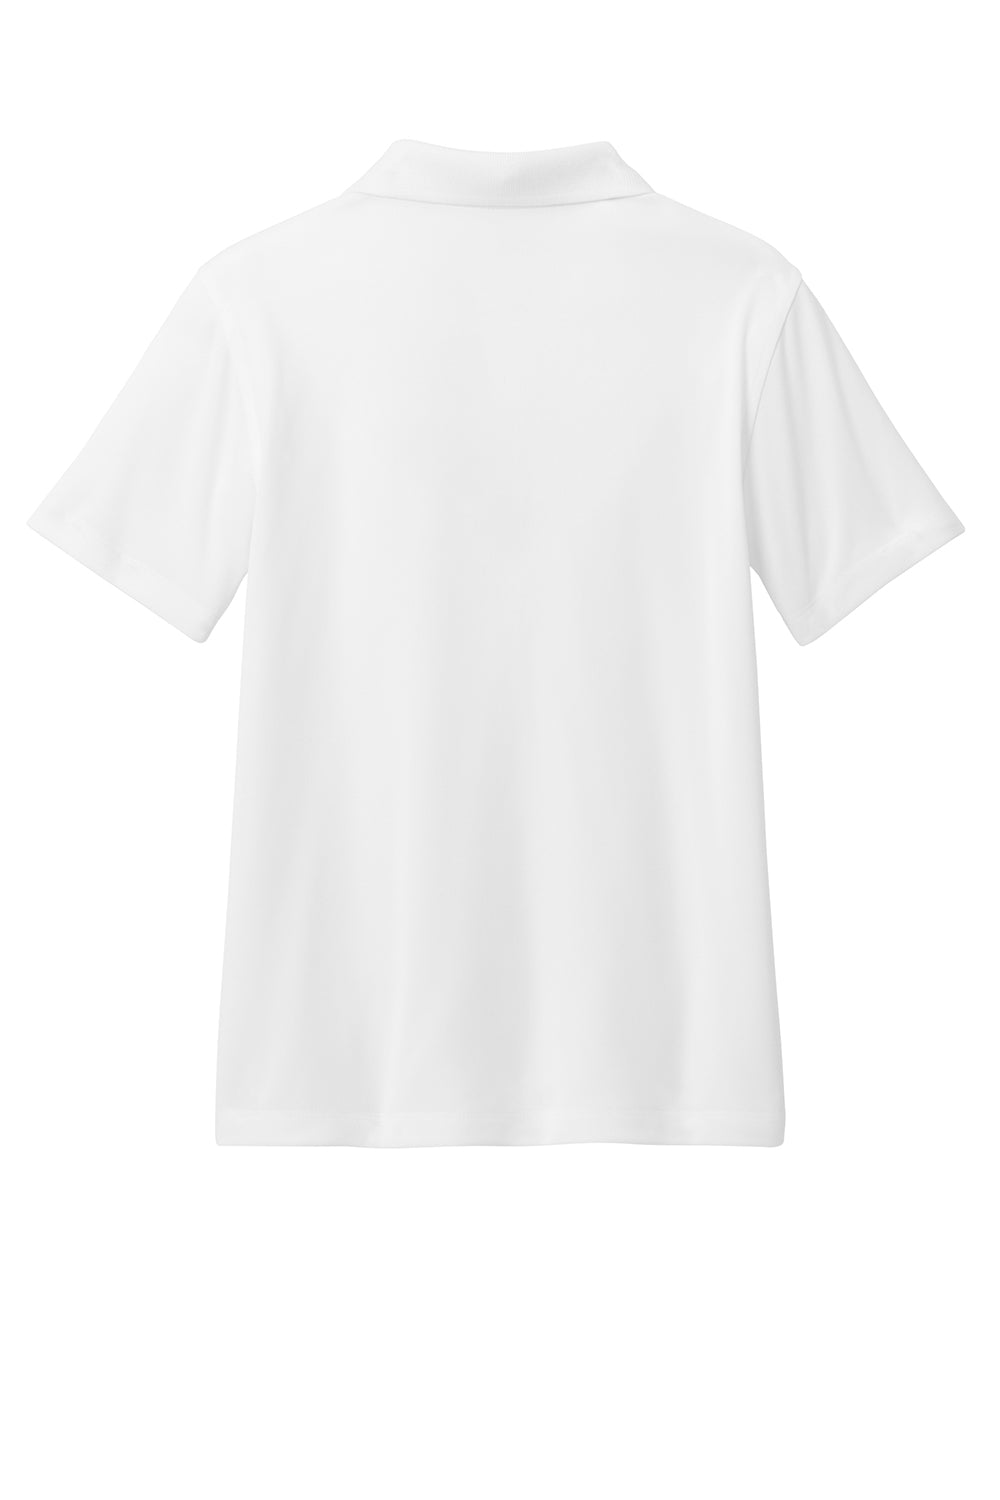 Port Authority Y110 Youth Dry Zone Moisture Wicking Short Sleeve Polo Shirt White Flat Back